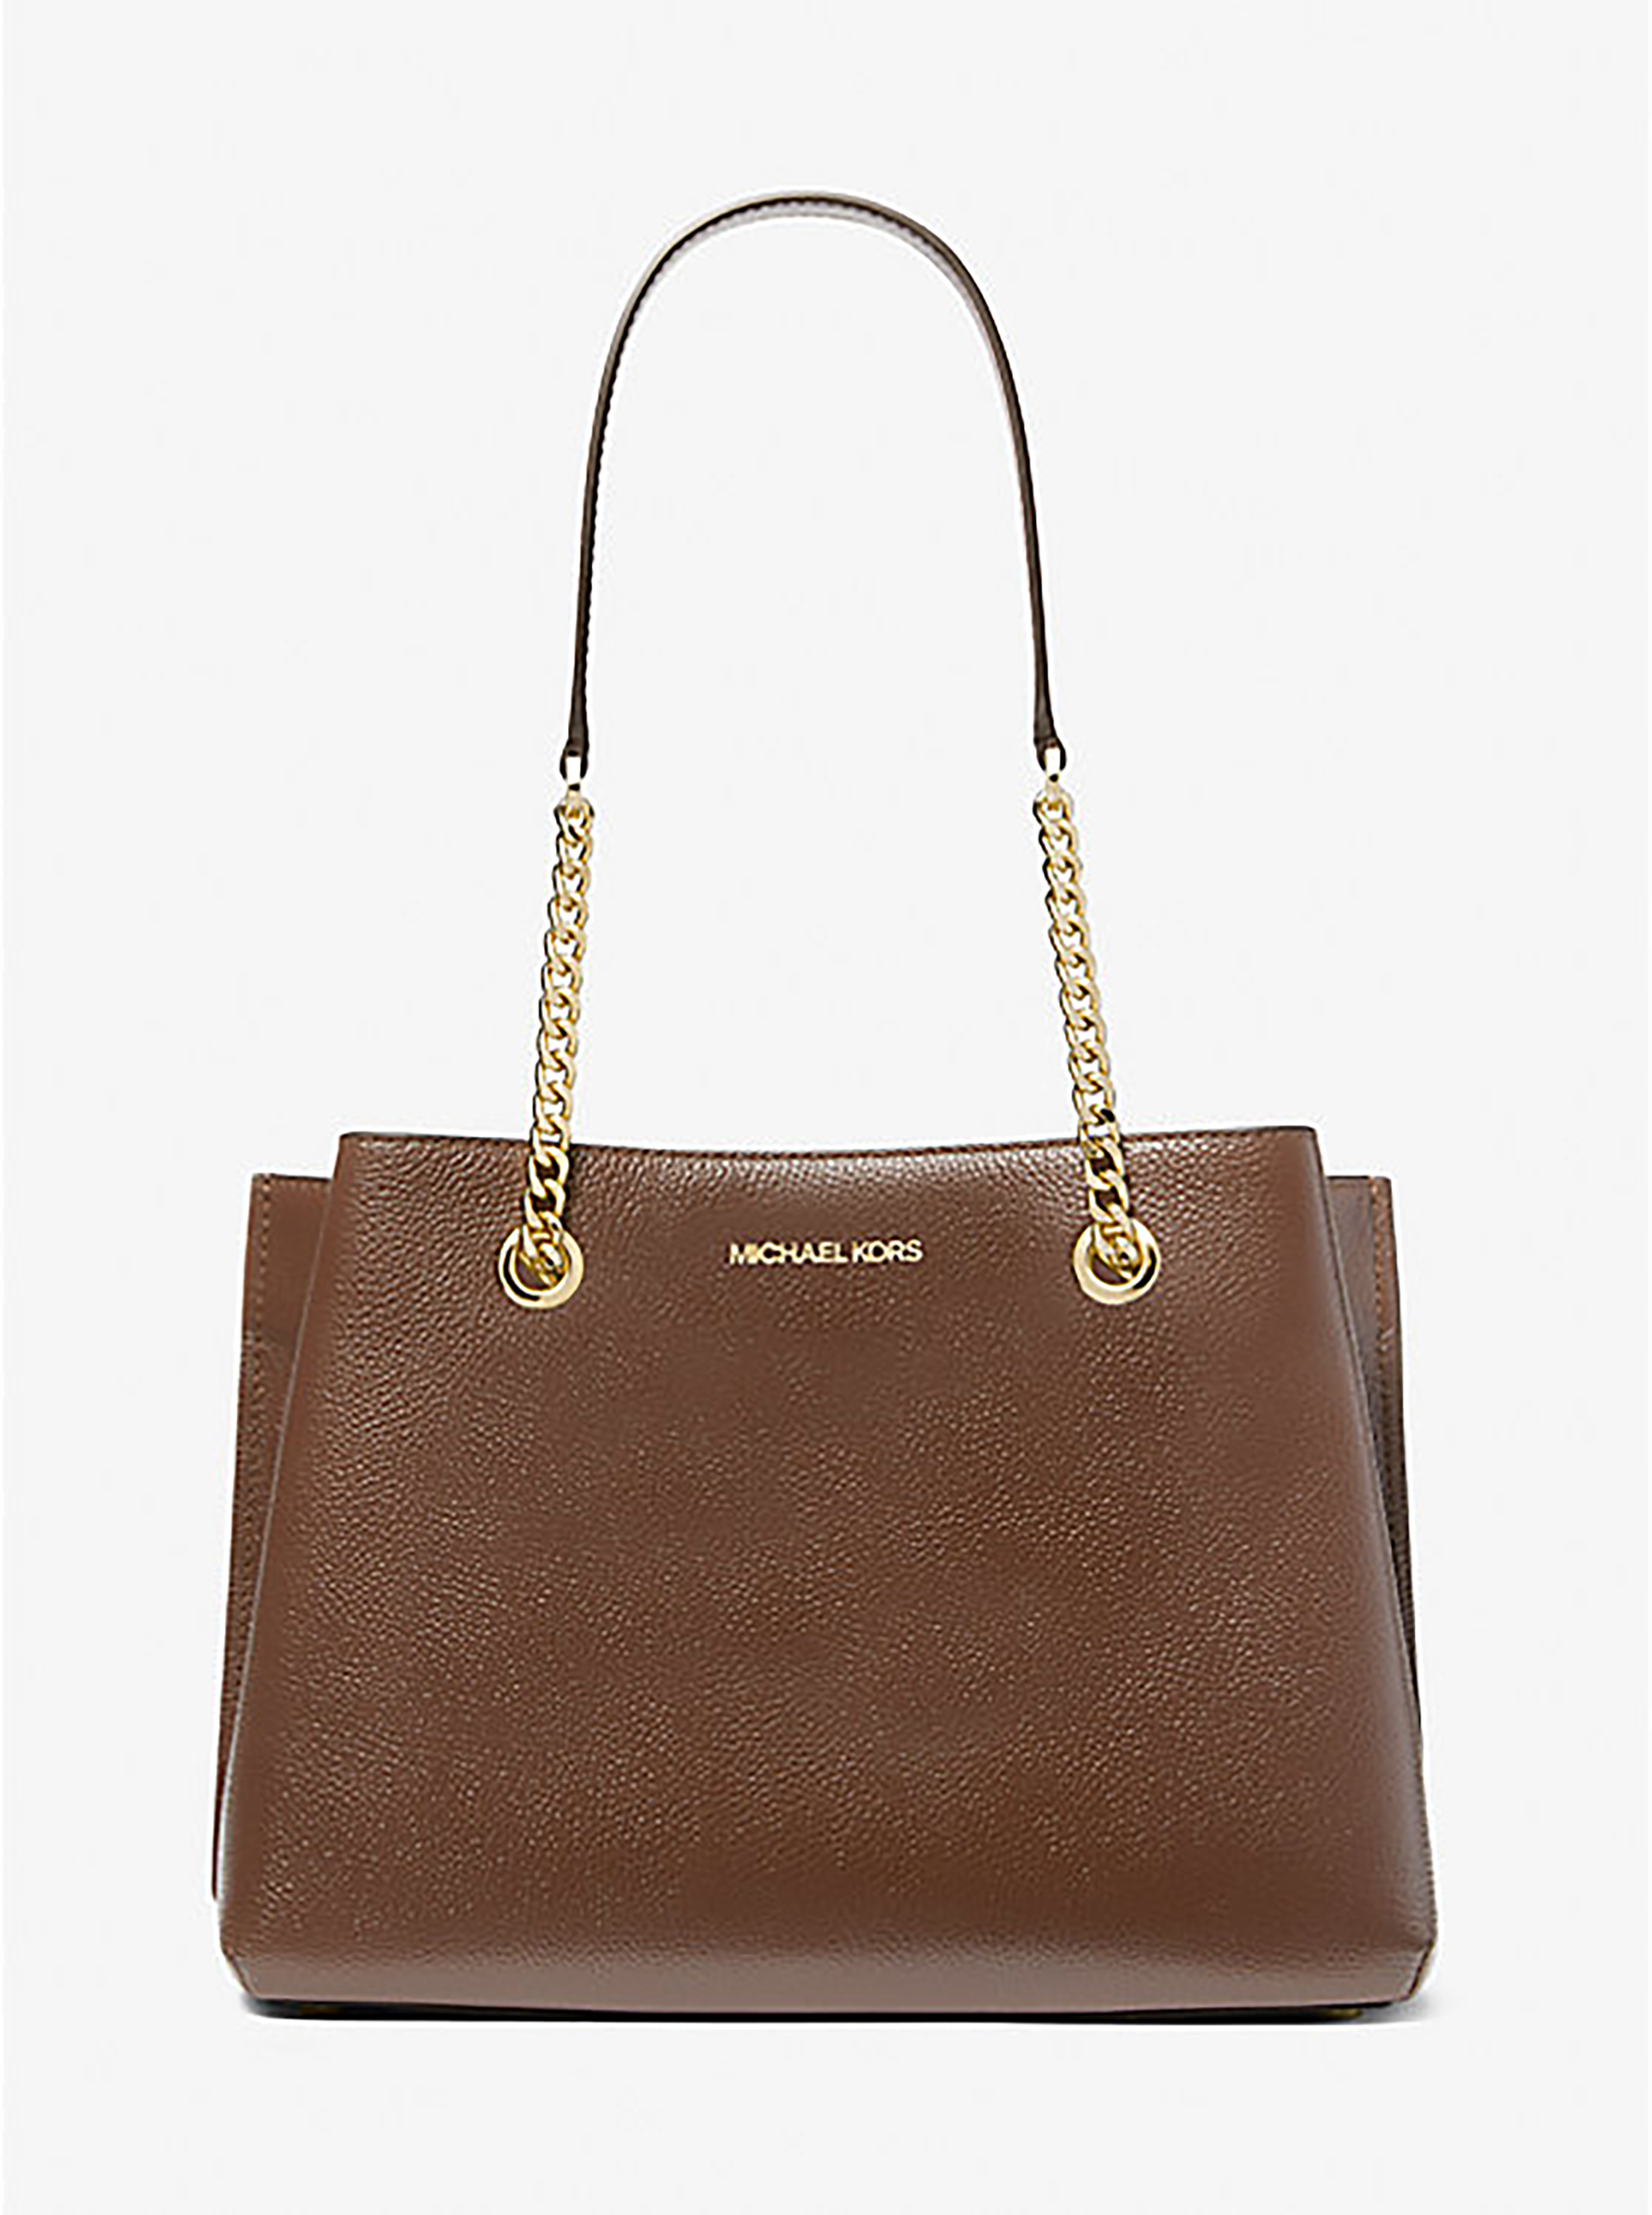 Сумка шоппер Michael Kors для женщин, Luggage, коричневый, размер UN, 35S0GXZS7L